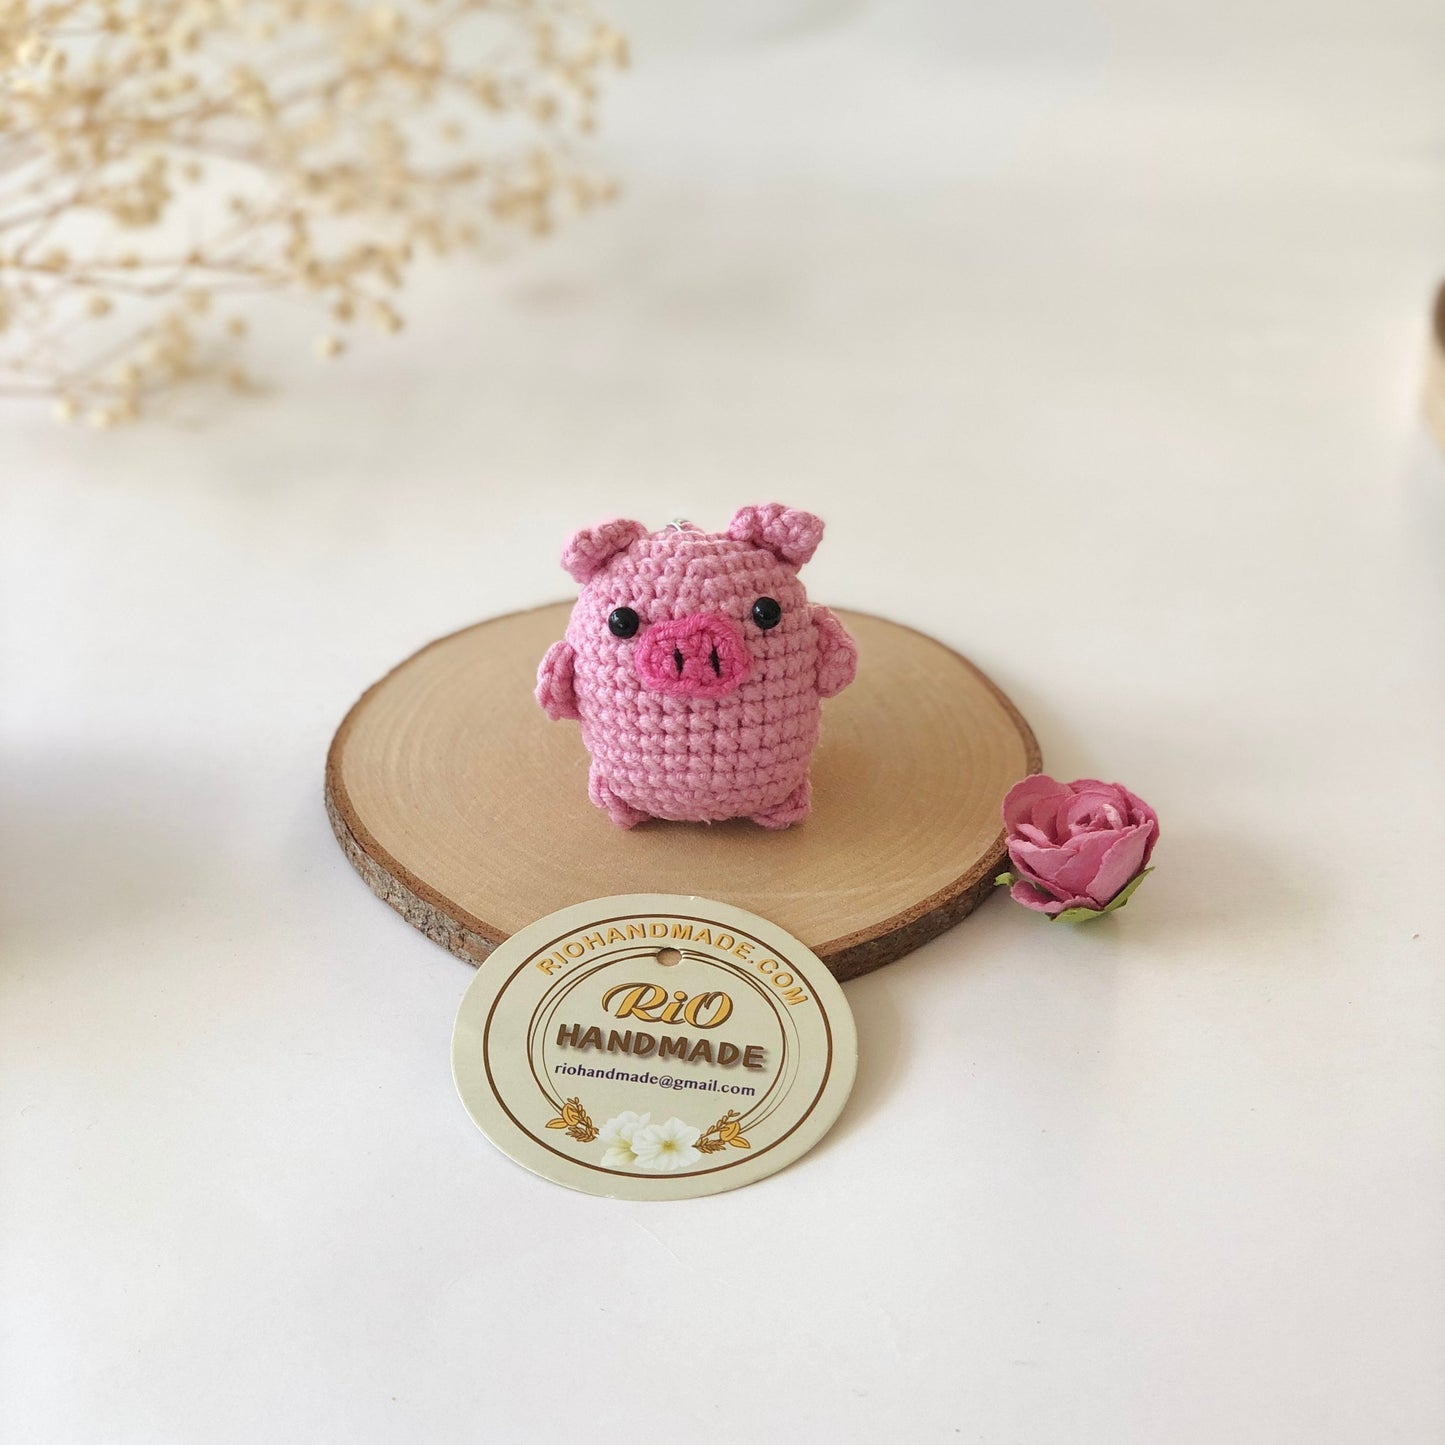 Handmade pink pig crochet keychain mirror charm crochet amigurumi, plushie toy, gift, car hanging accessory